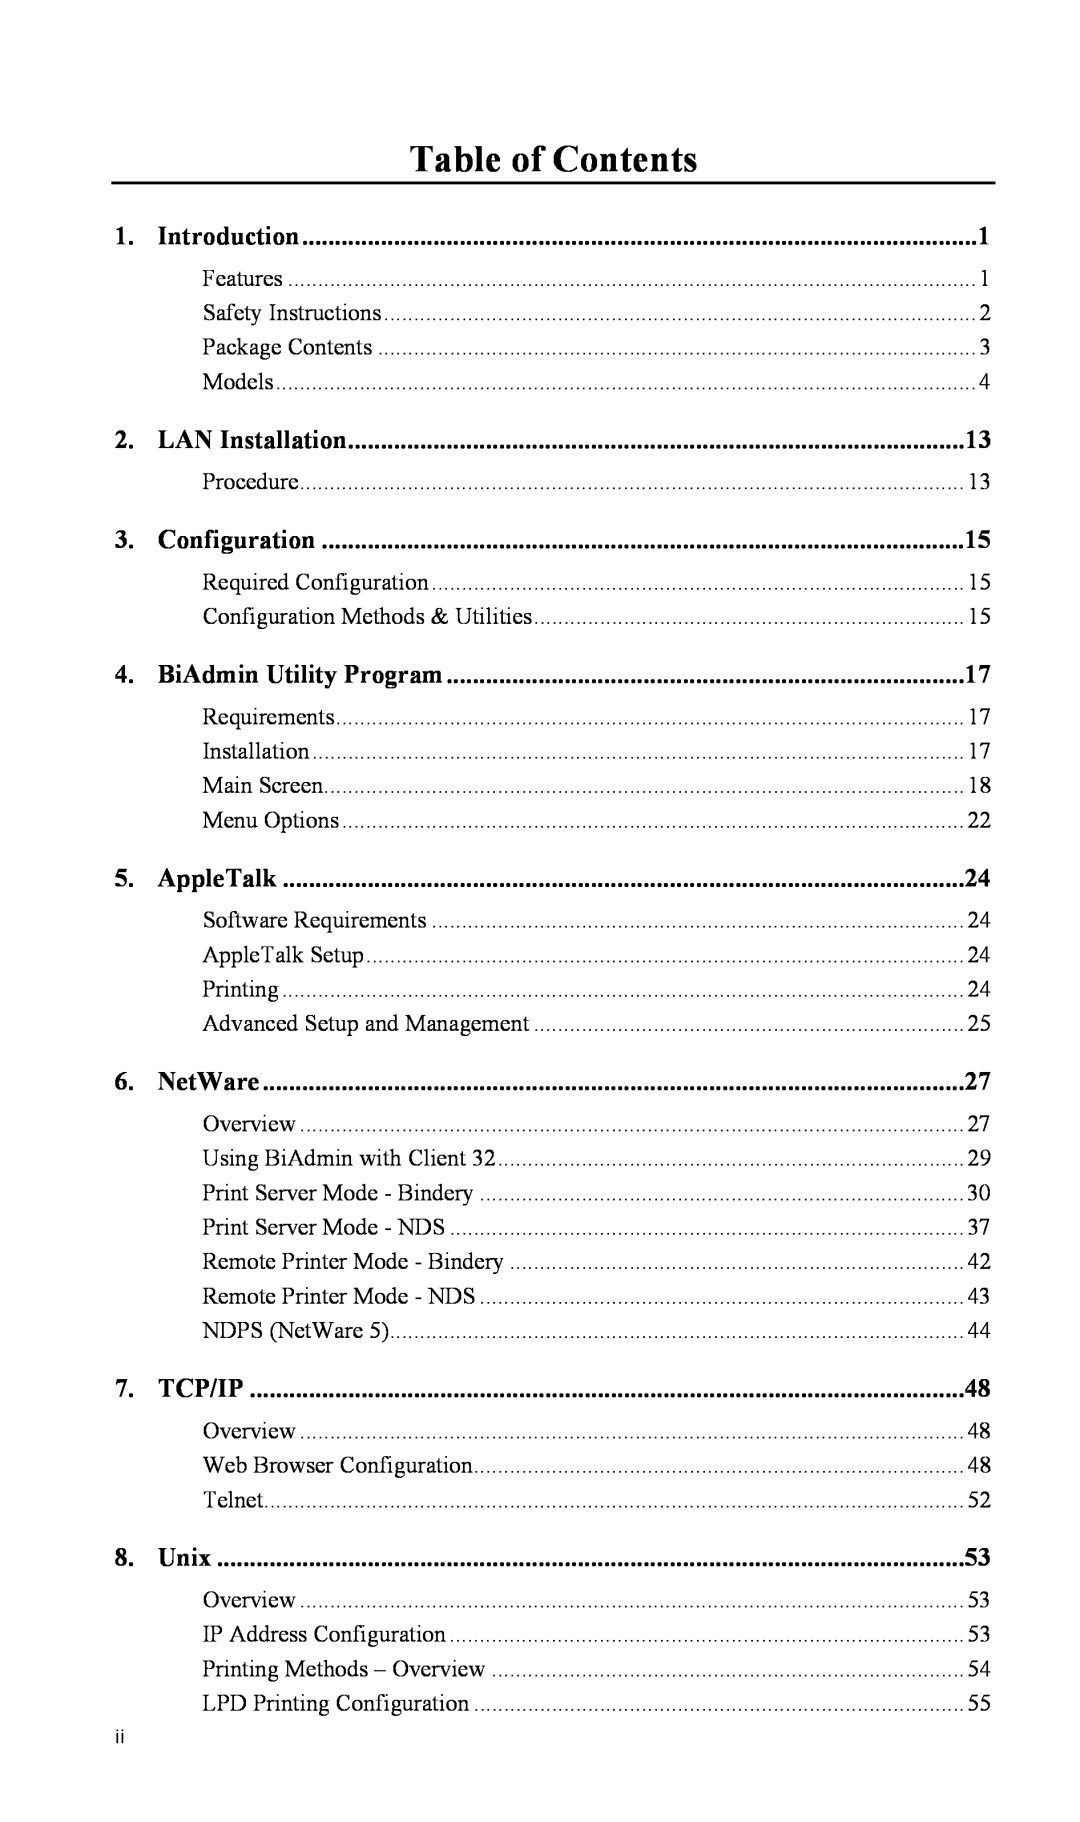 LevelOne FPS-2101USB Table of Contents, Introduction, LAN Installation, Configuration, BiAdmin Utility Program, AppleTalk 